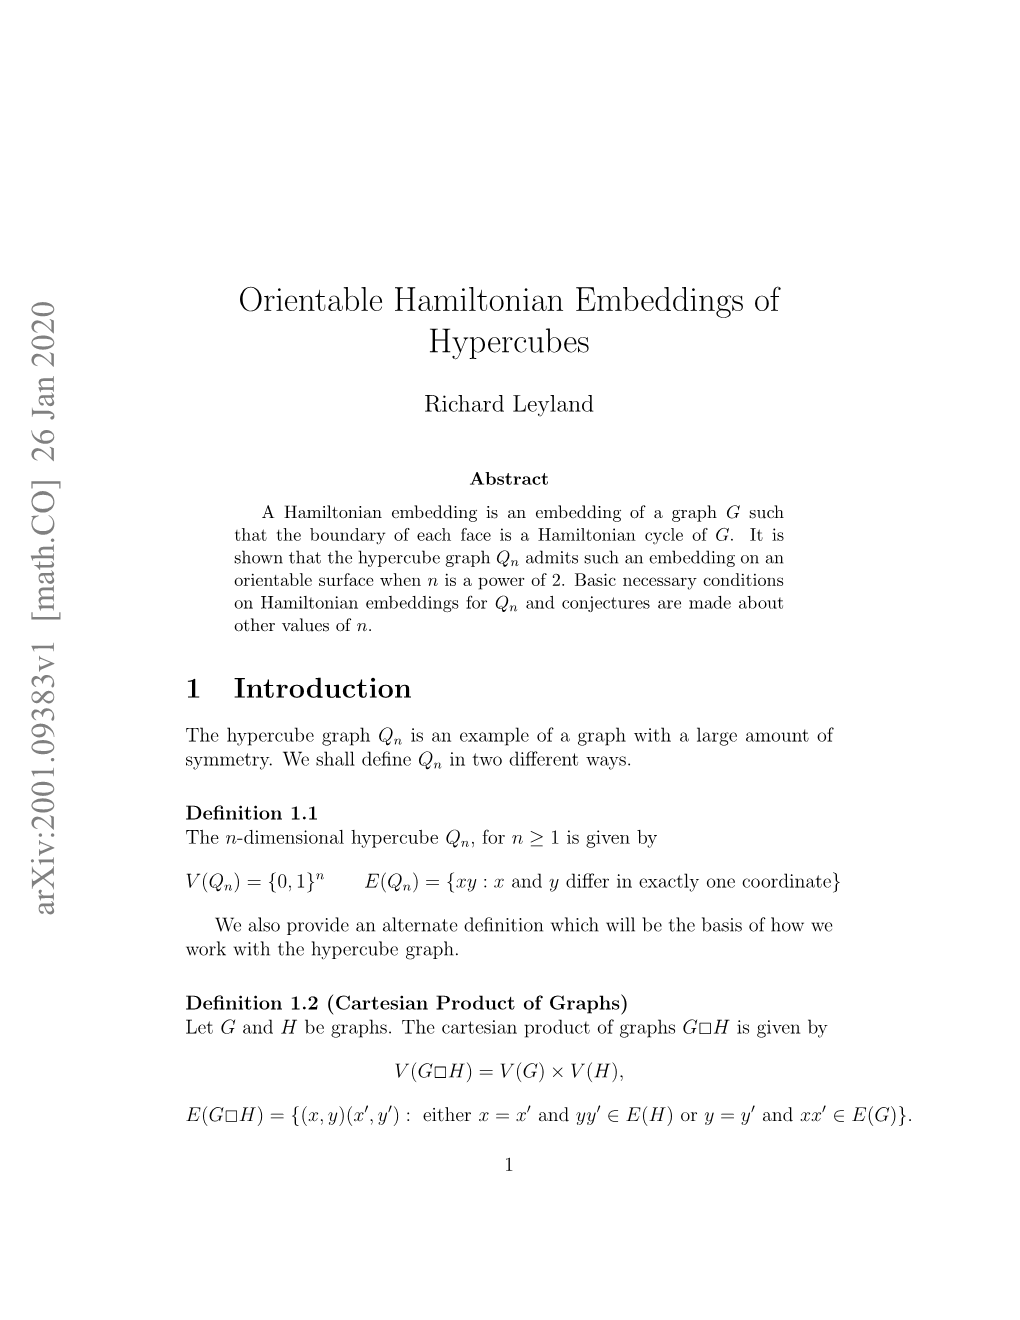 26 Jan 2020 Orientable Hamiltonian Embeddings of Hypercubes